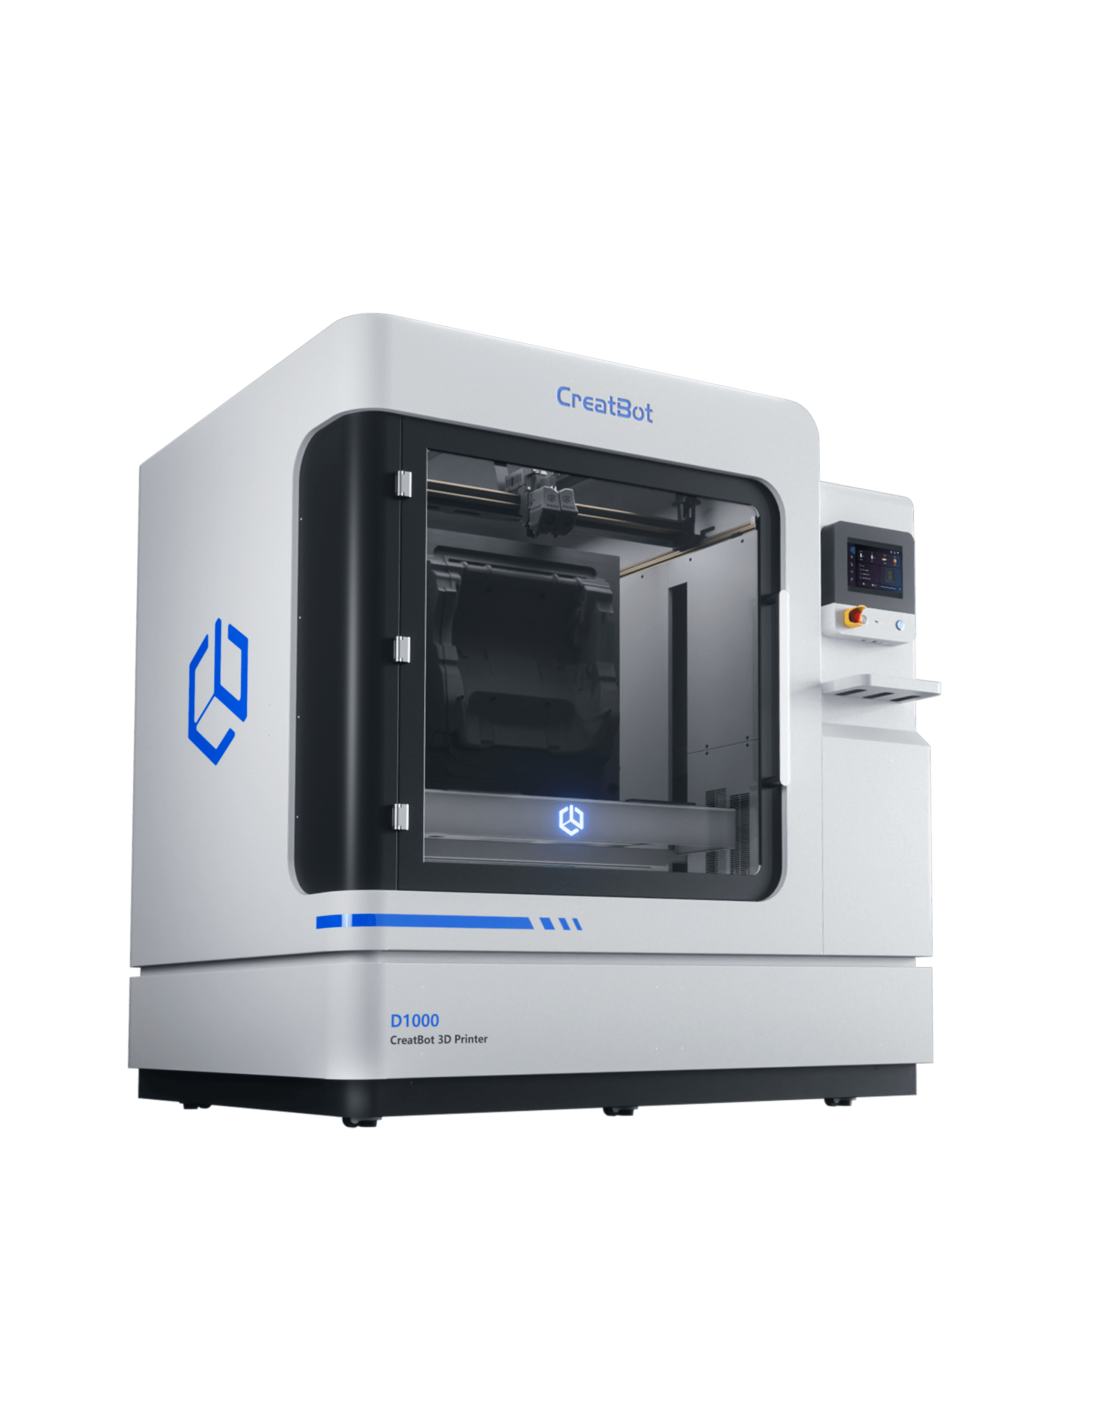 Creatbot D1000 - large format industrial 3D printer